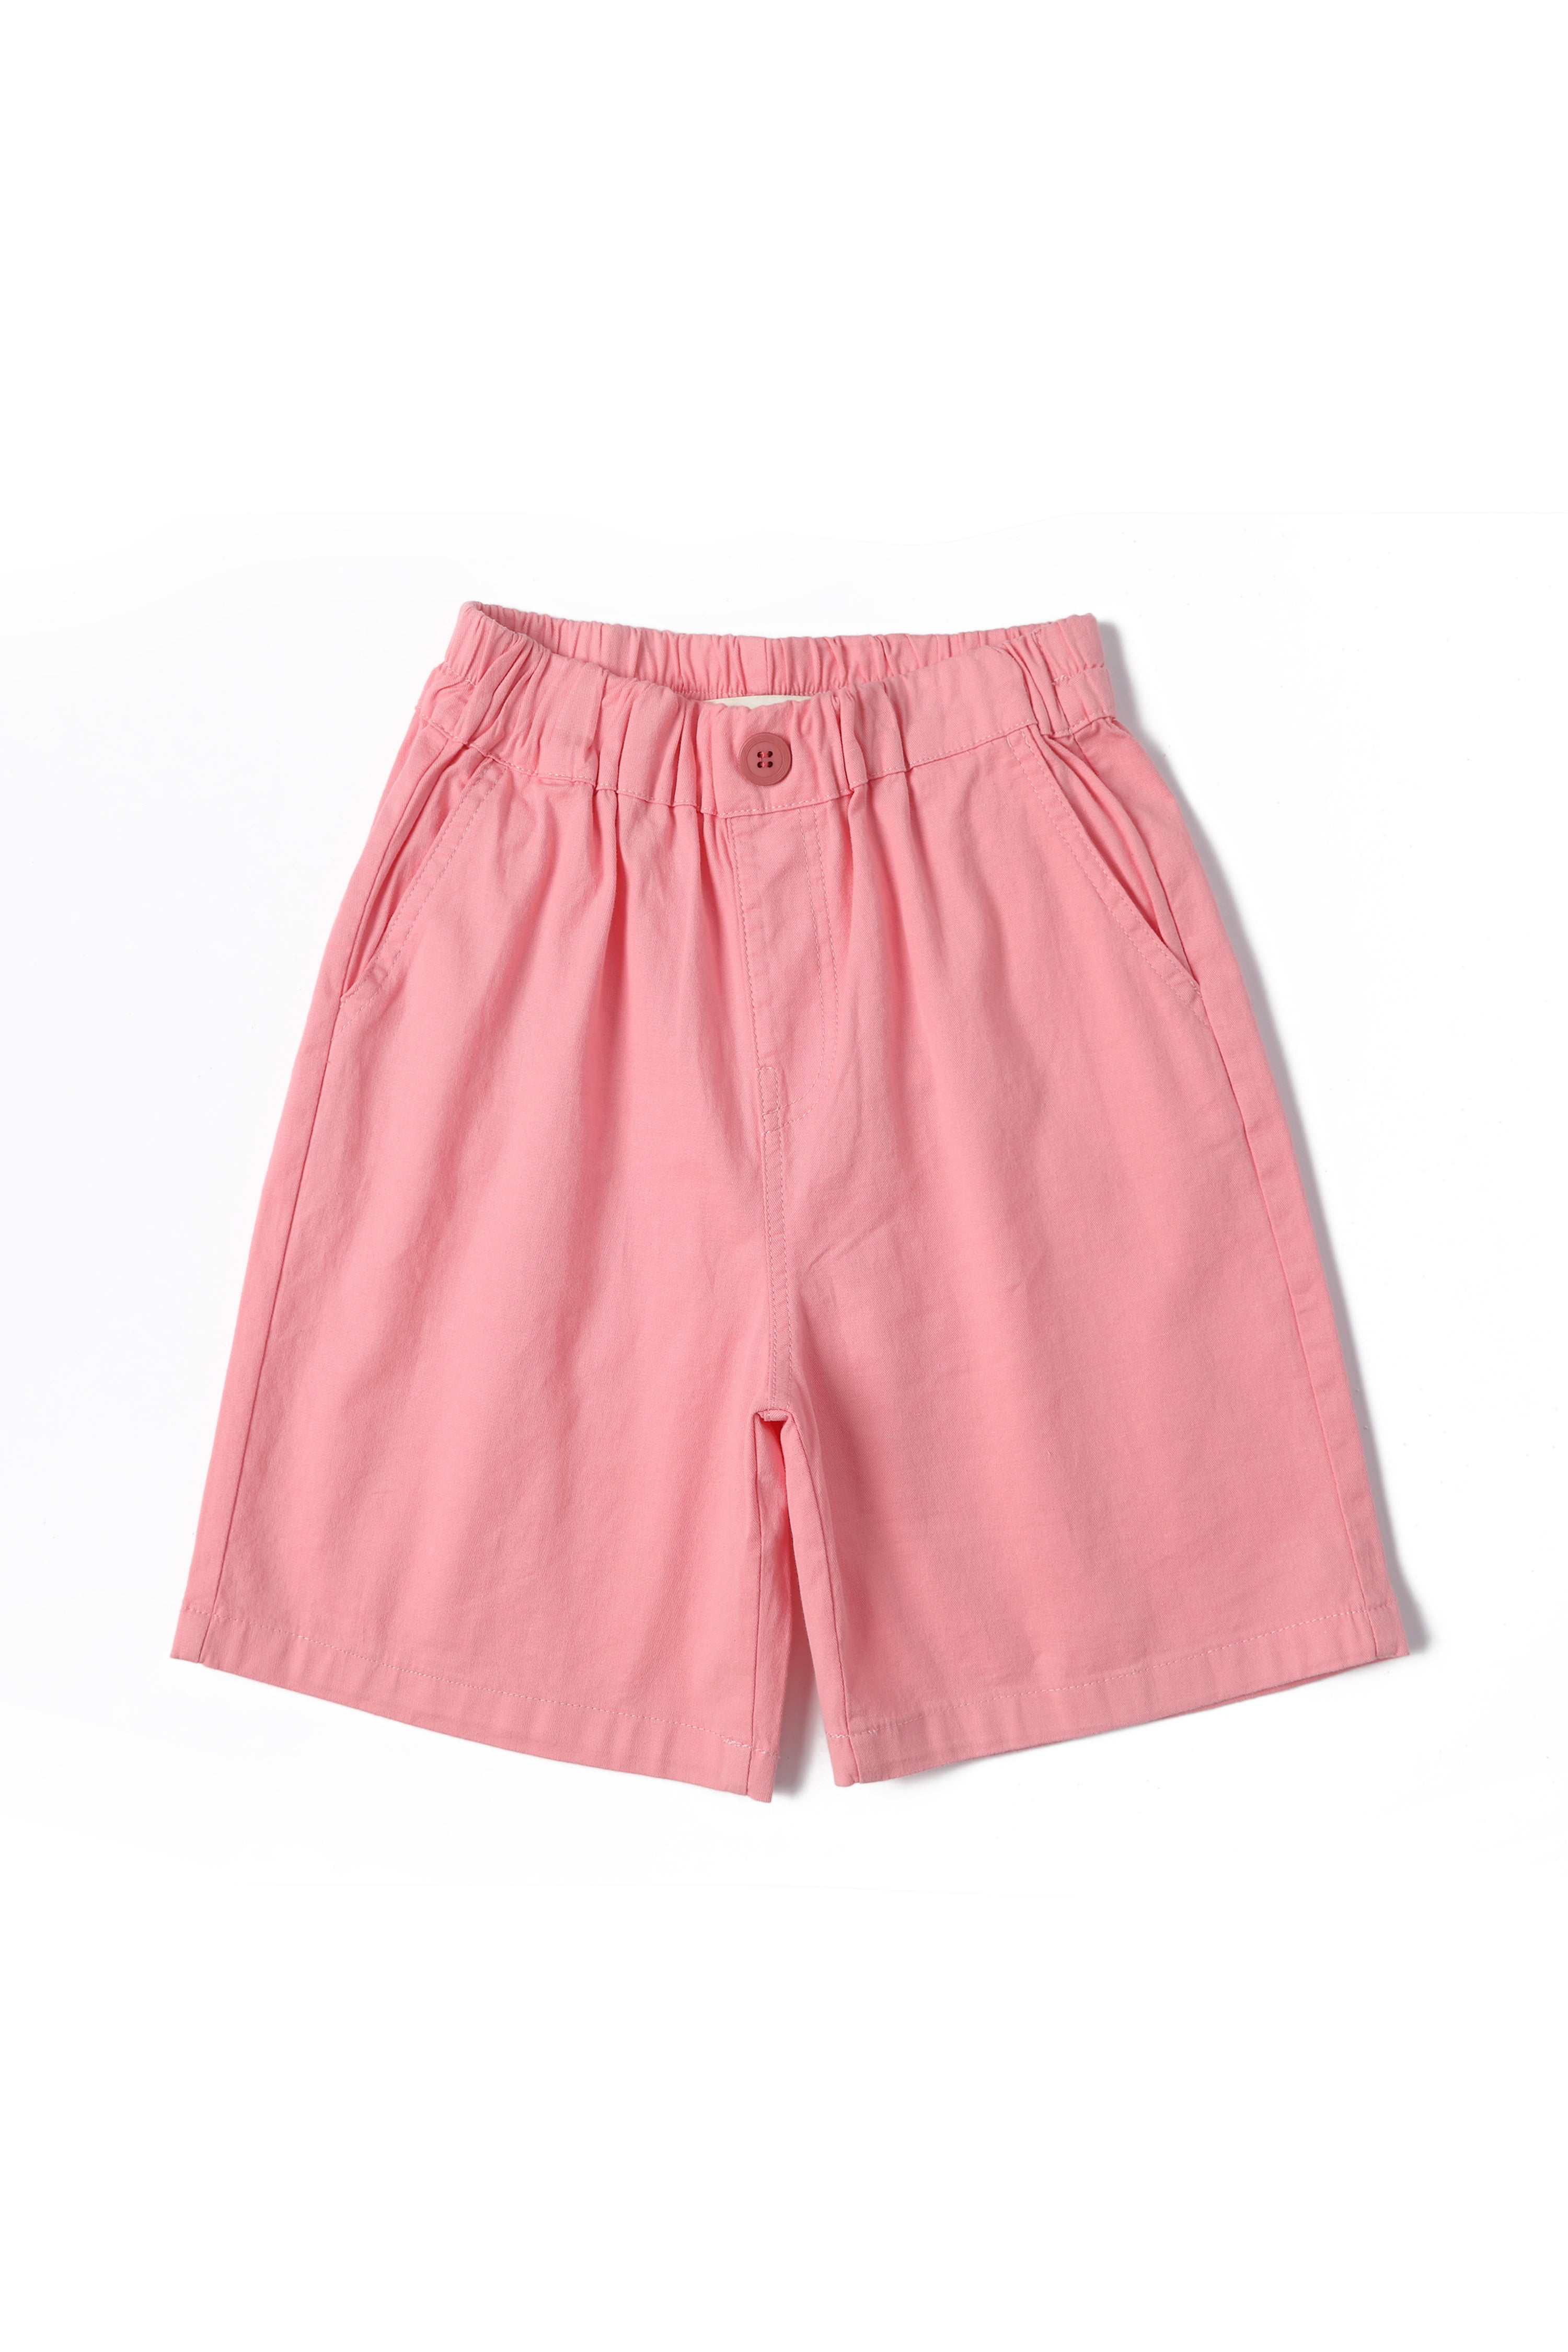 Urban Chic Pink Tailored Shorts